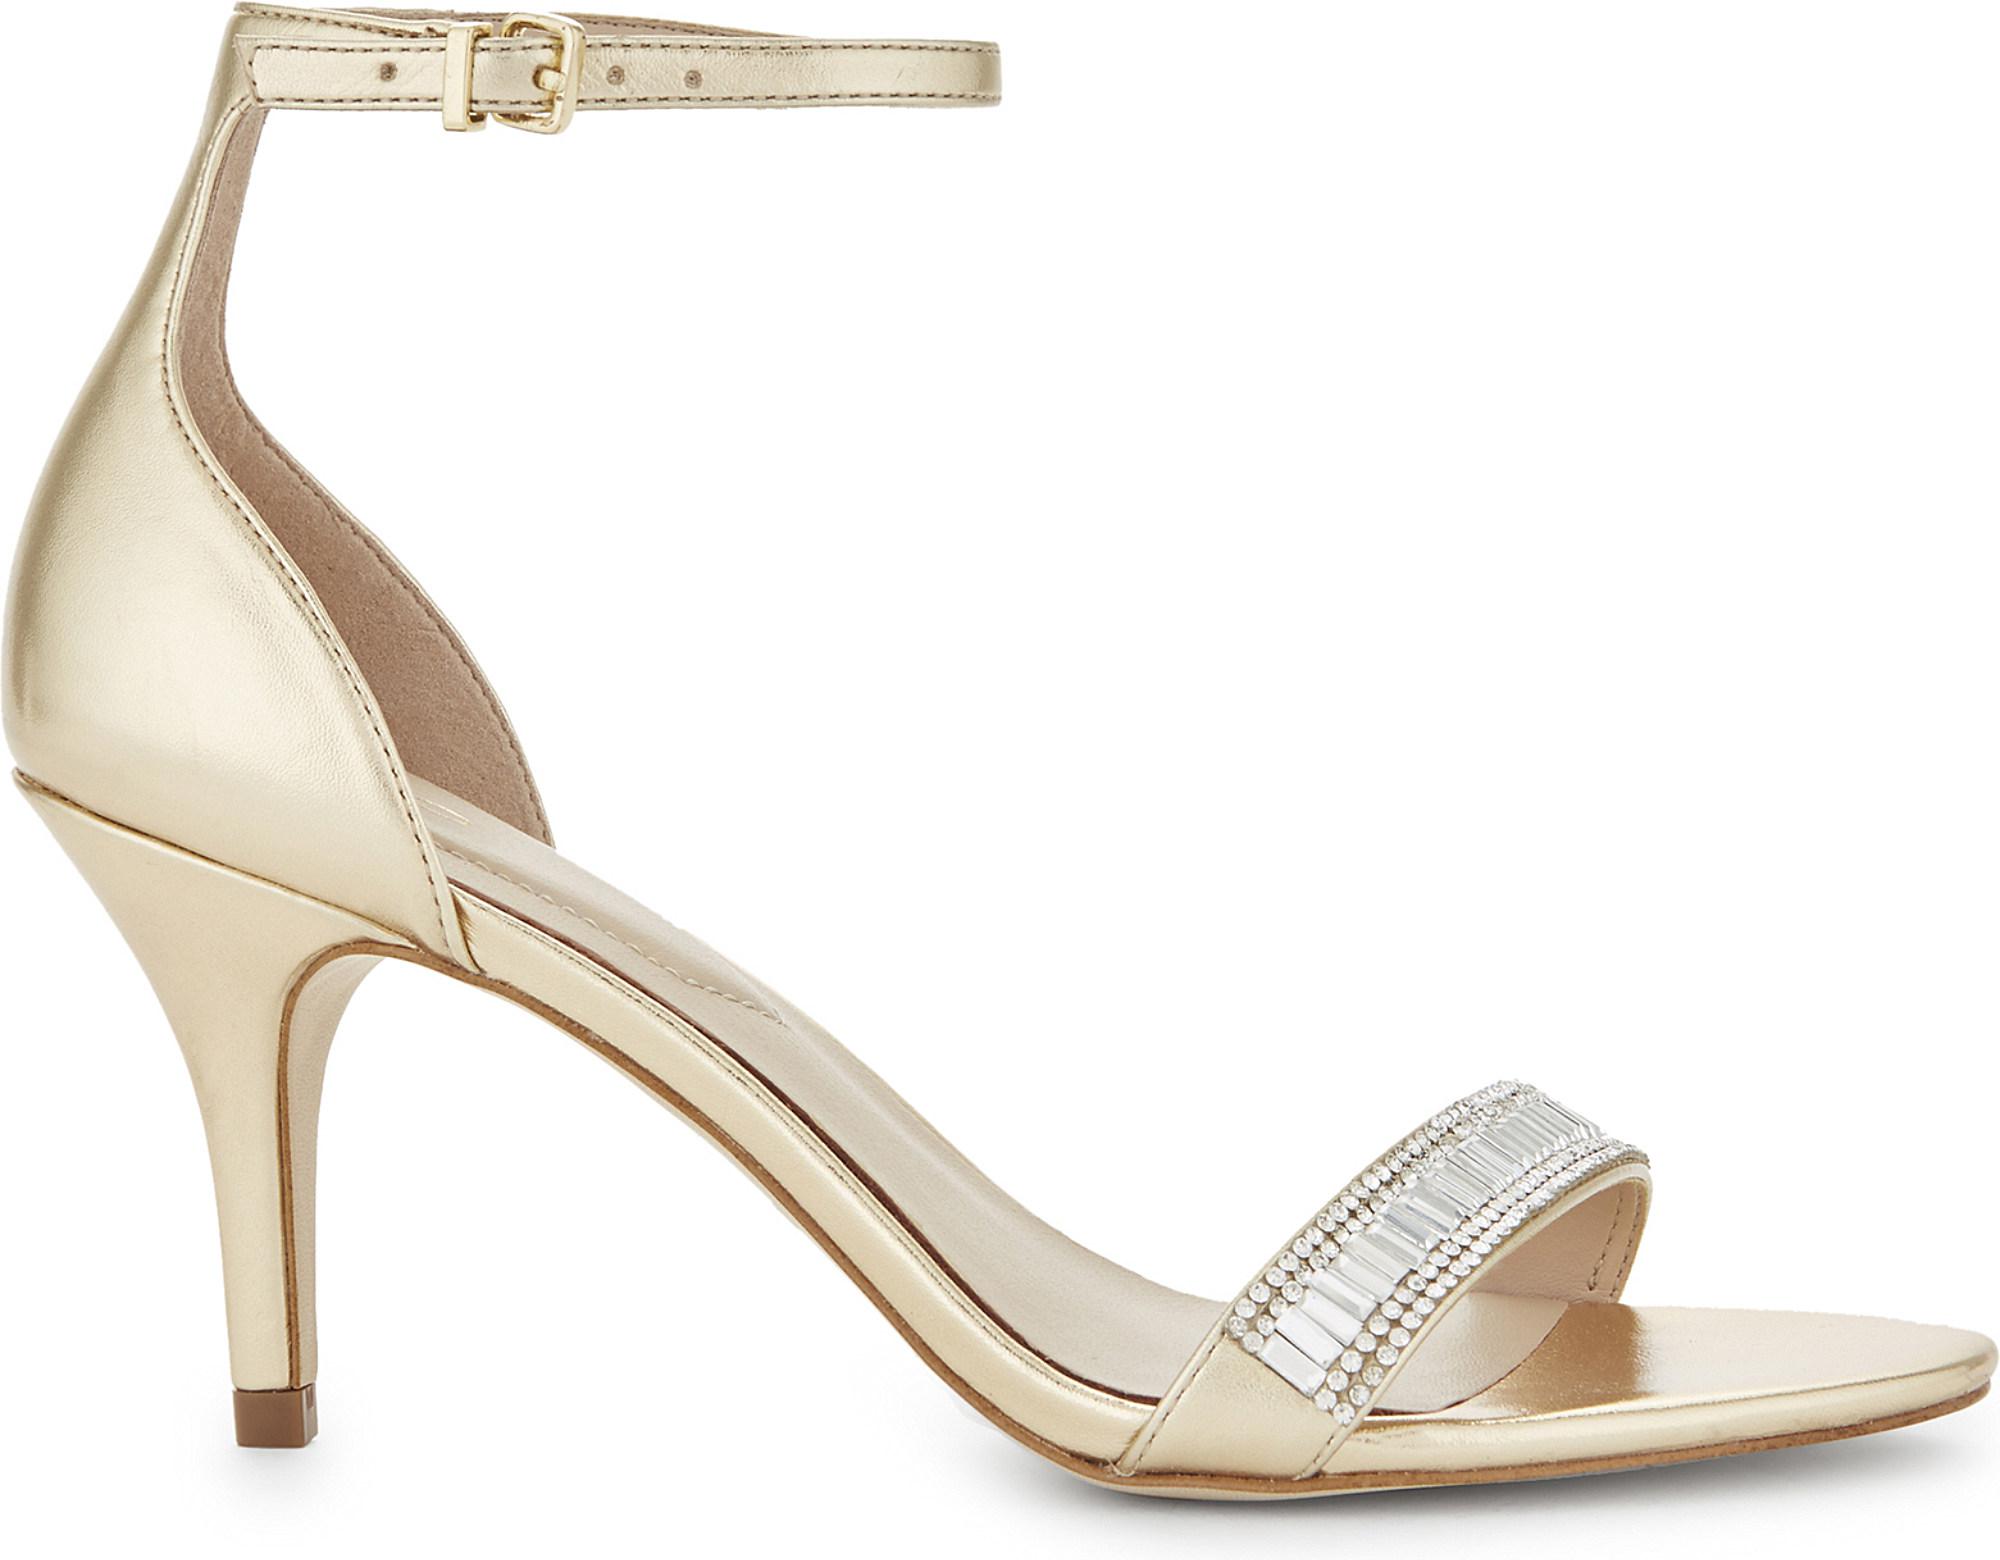 ALDO Leather Kaylla Embellished Heeled Sandals in Gold (Metallic) - Lyst